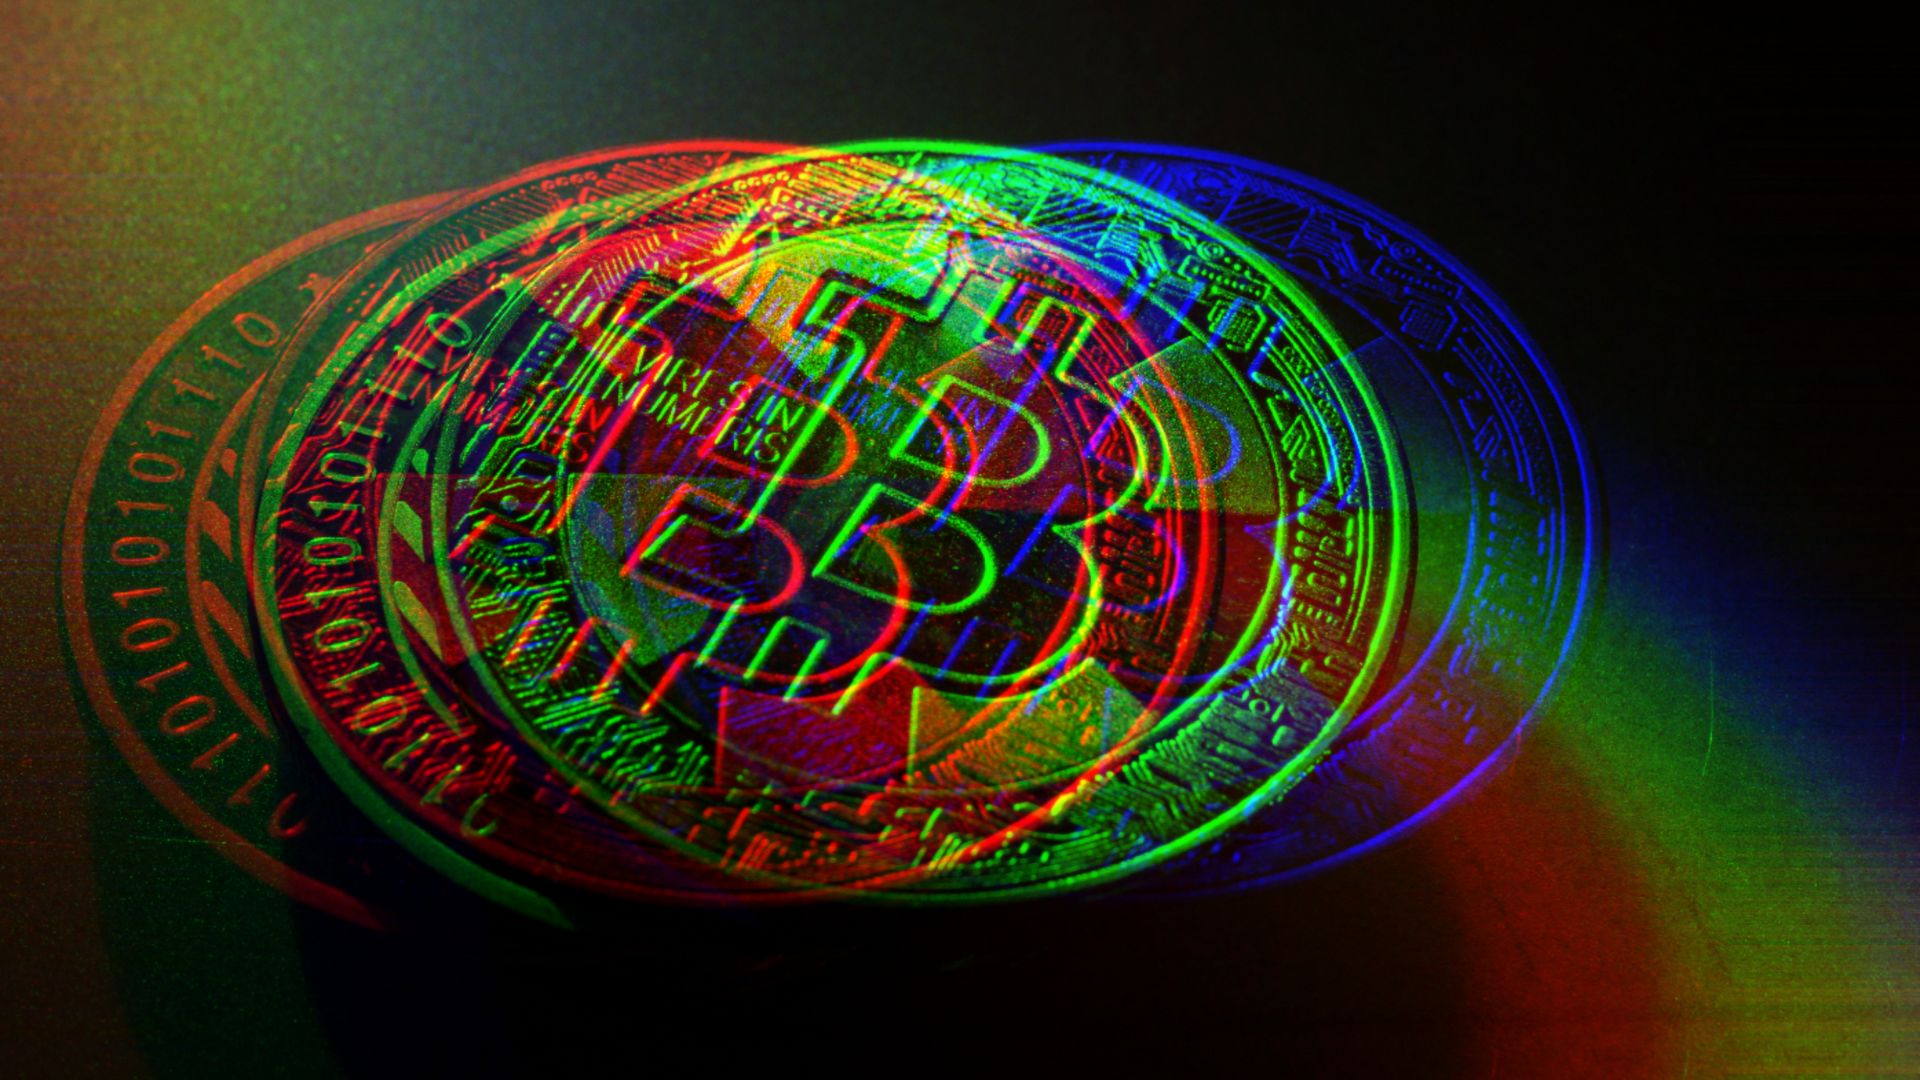 Le Bitcoin : Monnaie ou Illusion ?, SCBS